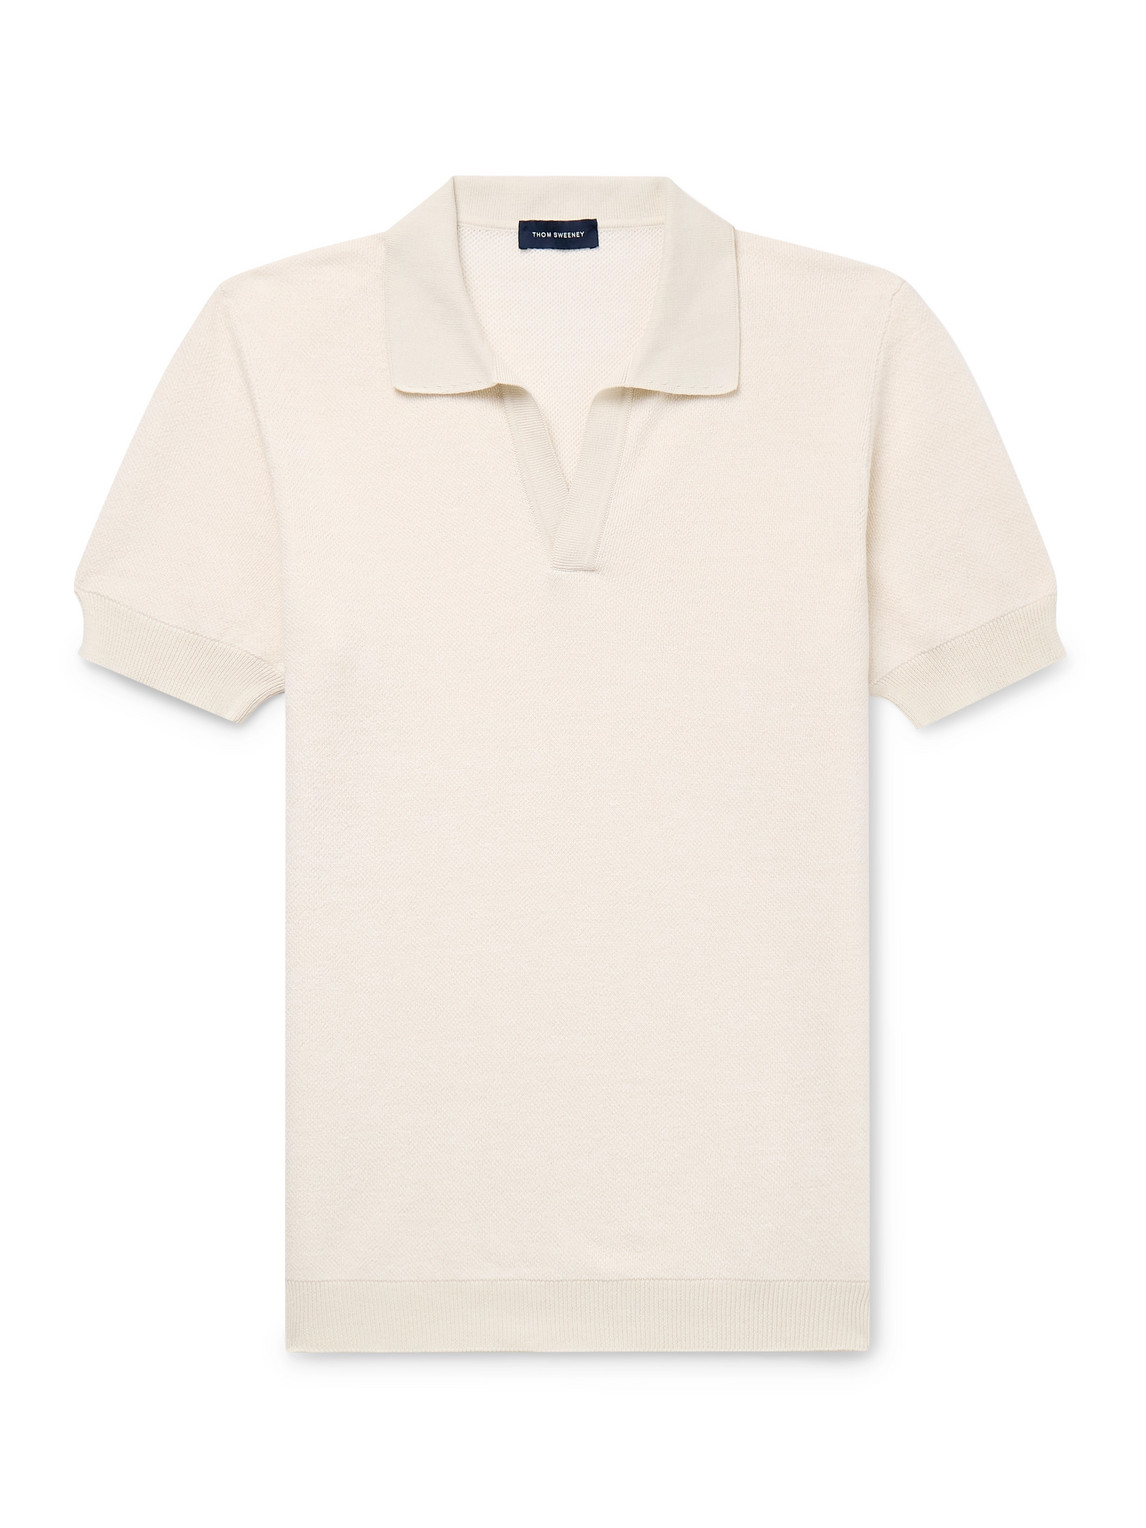 Birdseye Cotton and Linen-Blend Polo Shirt